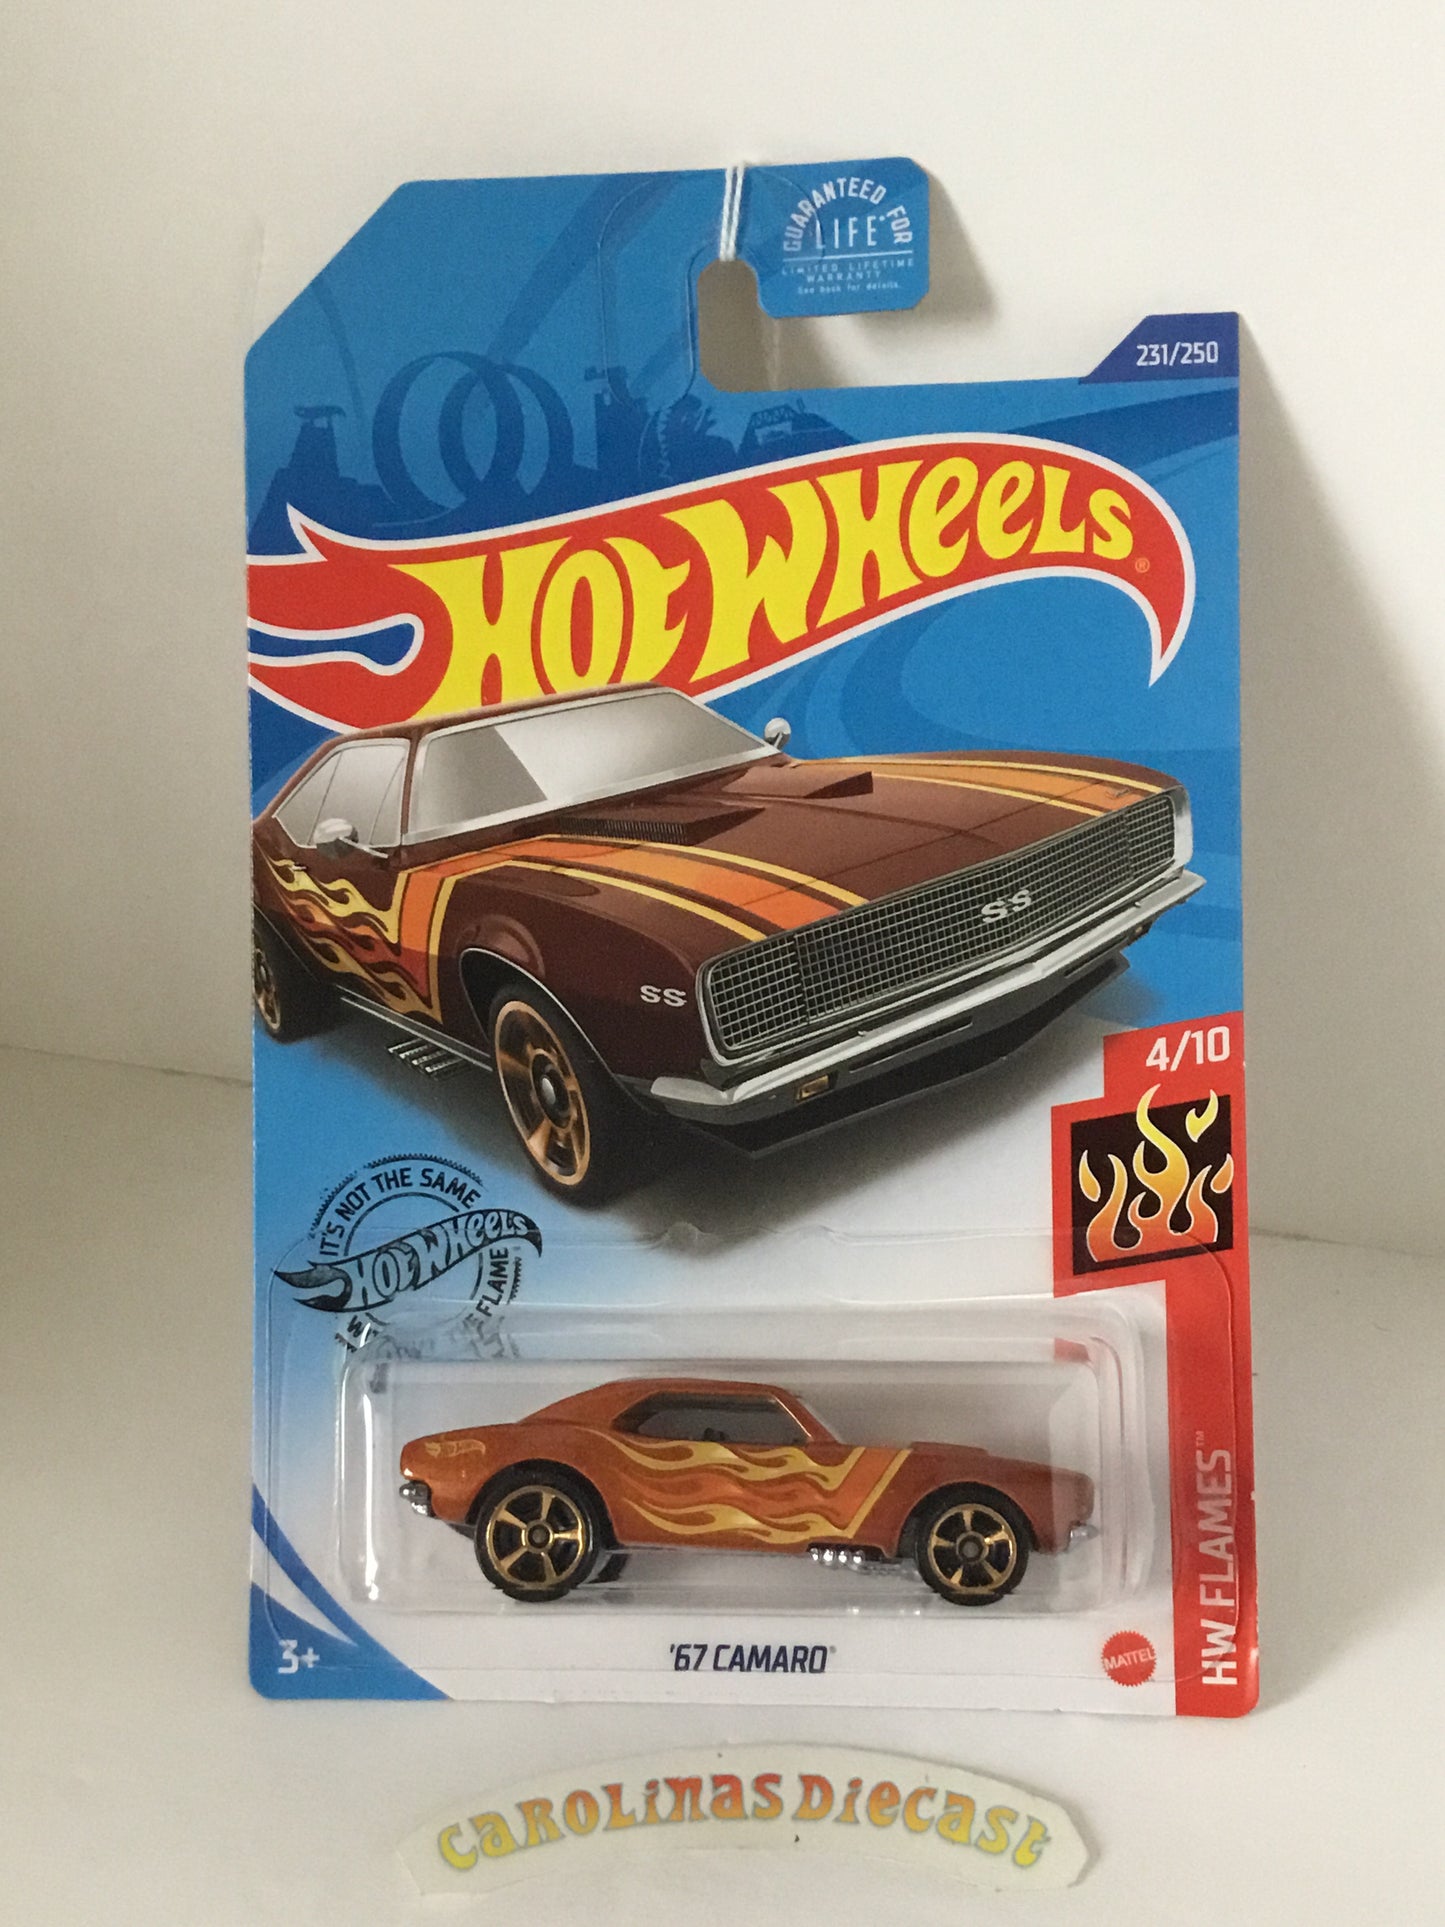 2020 hot wheels n case #231 67 camaro S8